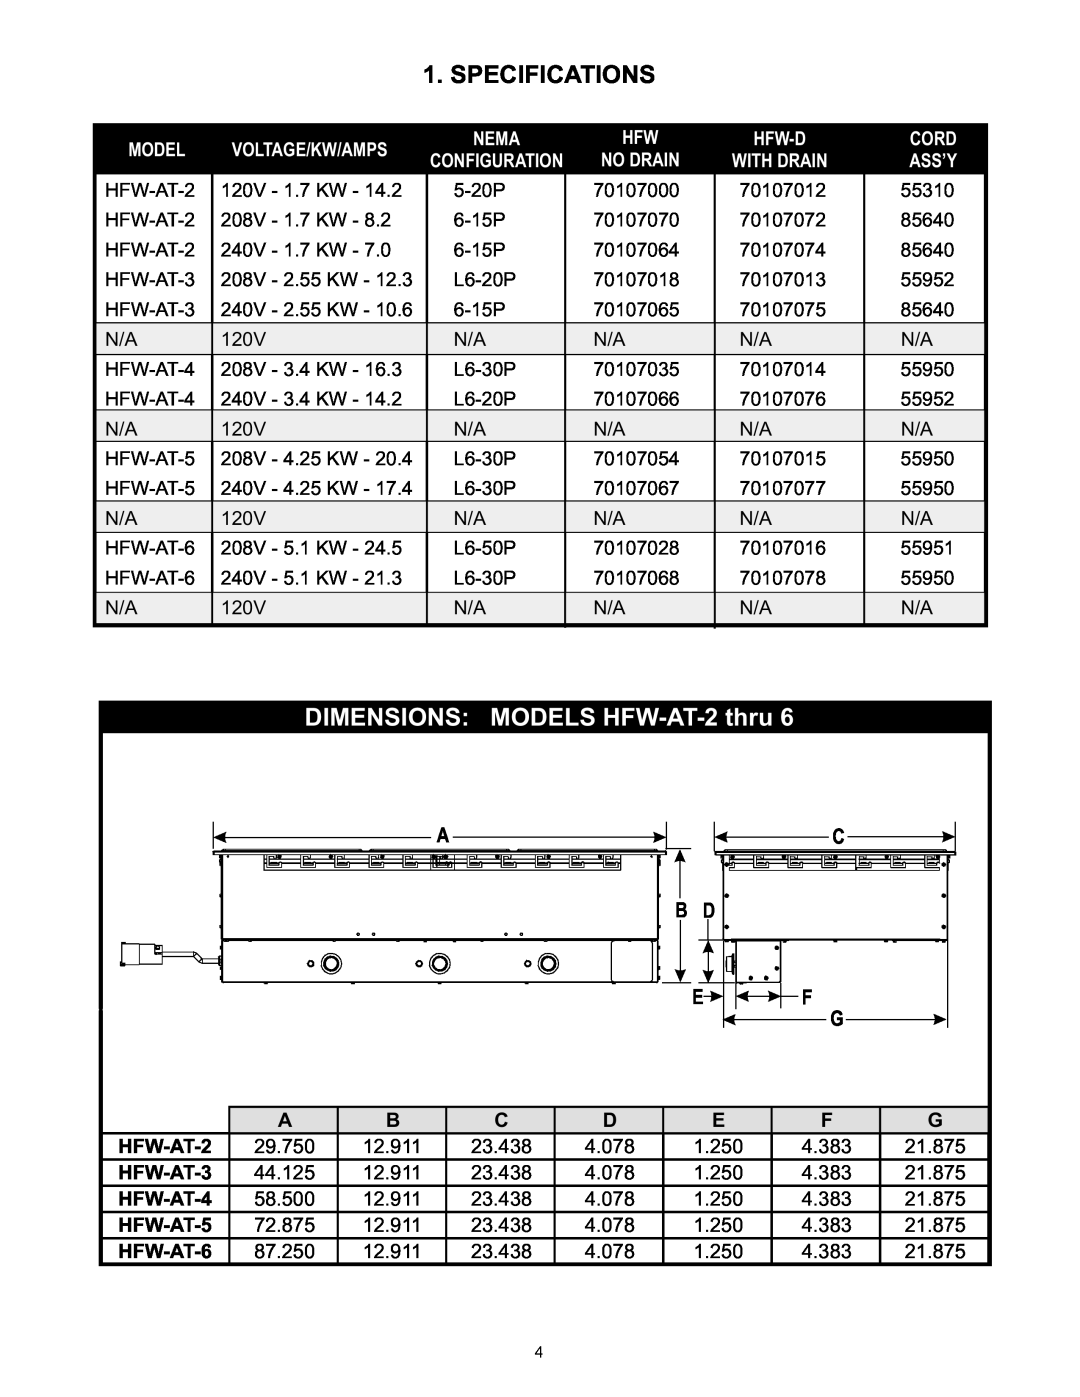 APW Wyott HFW-AT-2D 6D Specifications, DIMENSIONS: MODELS HFW-AT-2thru, Model, Voltage/Kw/Amps, Nema, Hfw-D, Cord, Ass’Y 